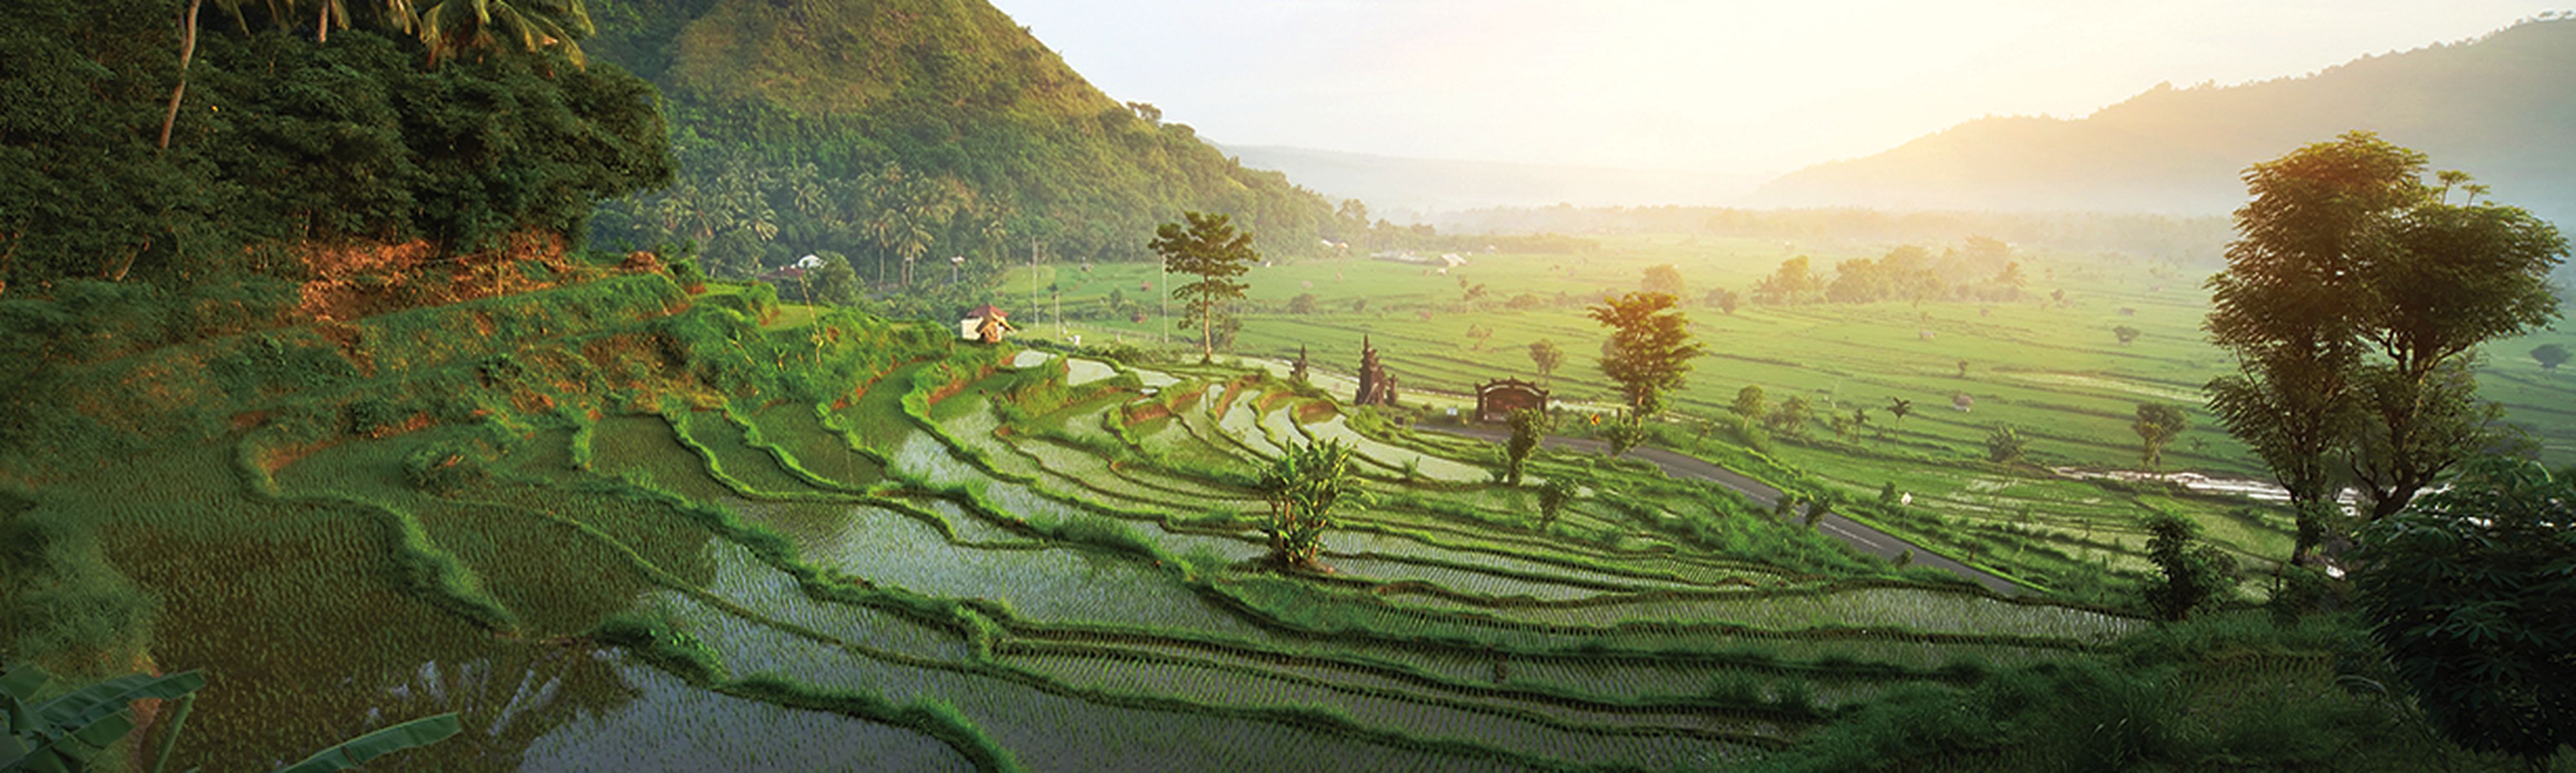 rice fields in Bali, Indonesia 